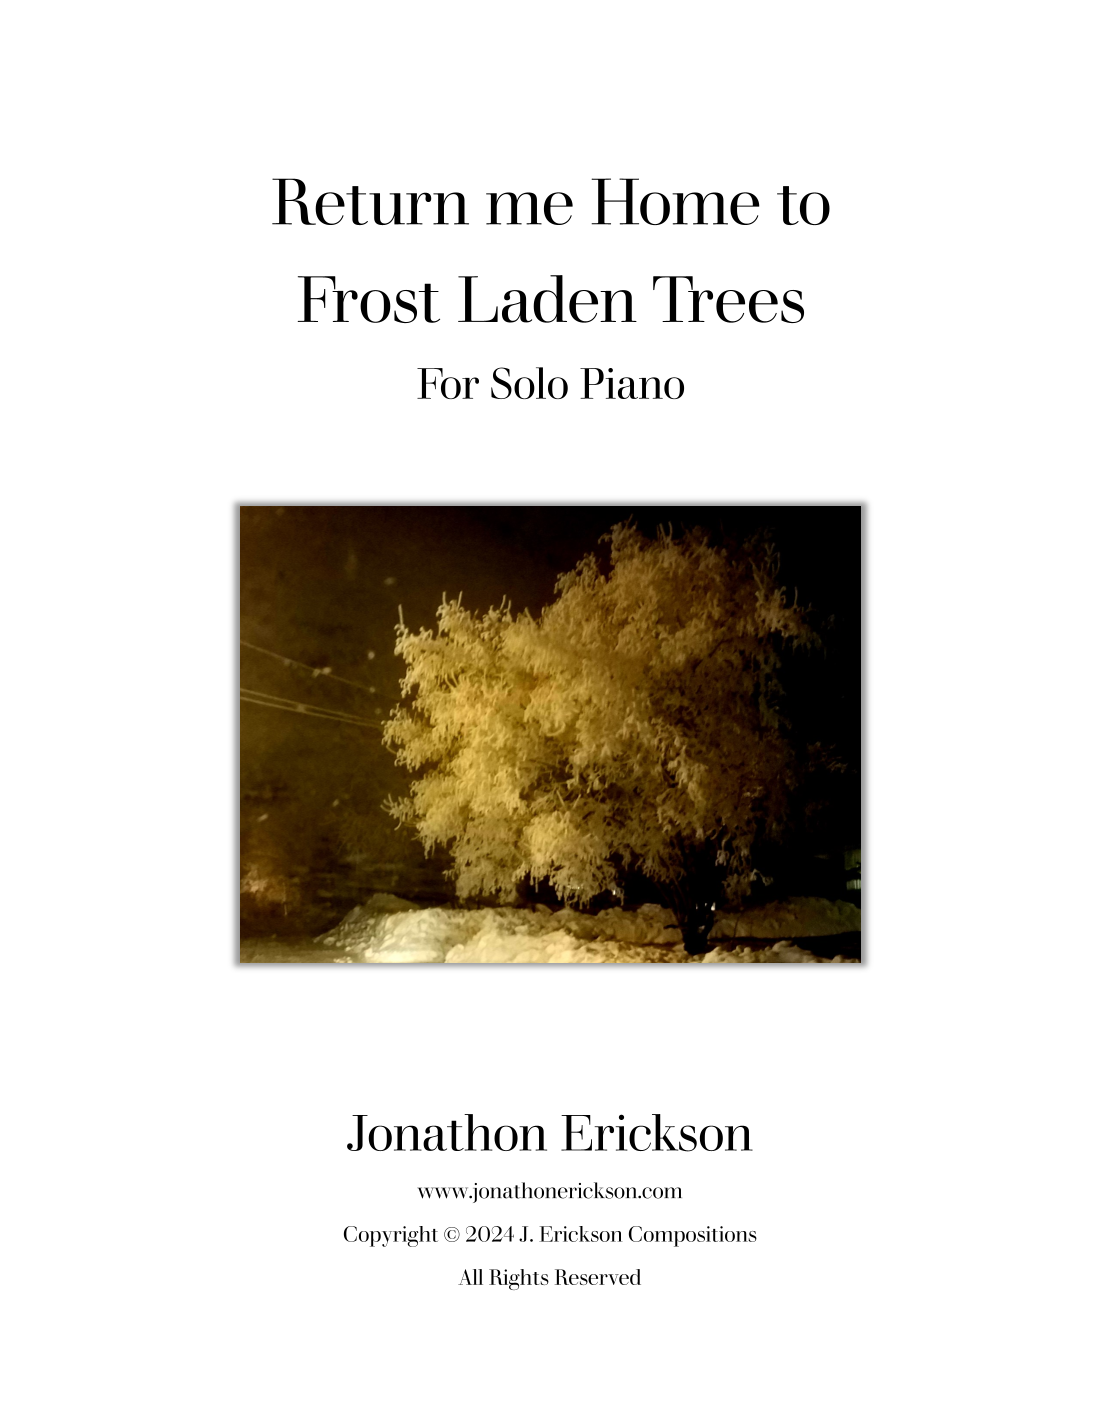 Jonathon Erickson-Return me Home to Frost Laden Trees